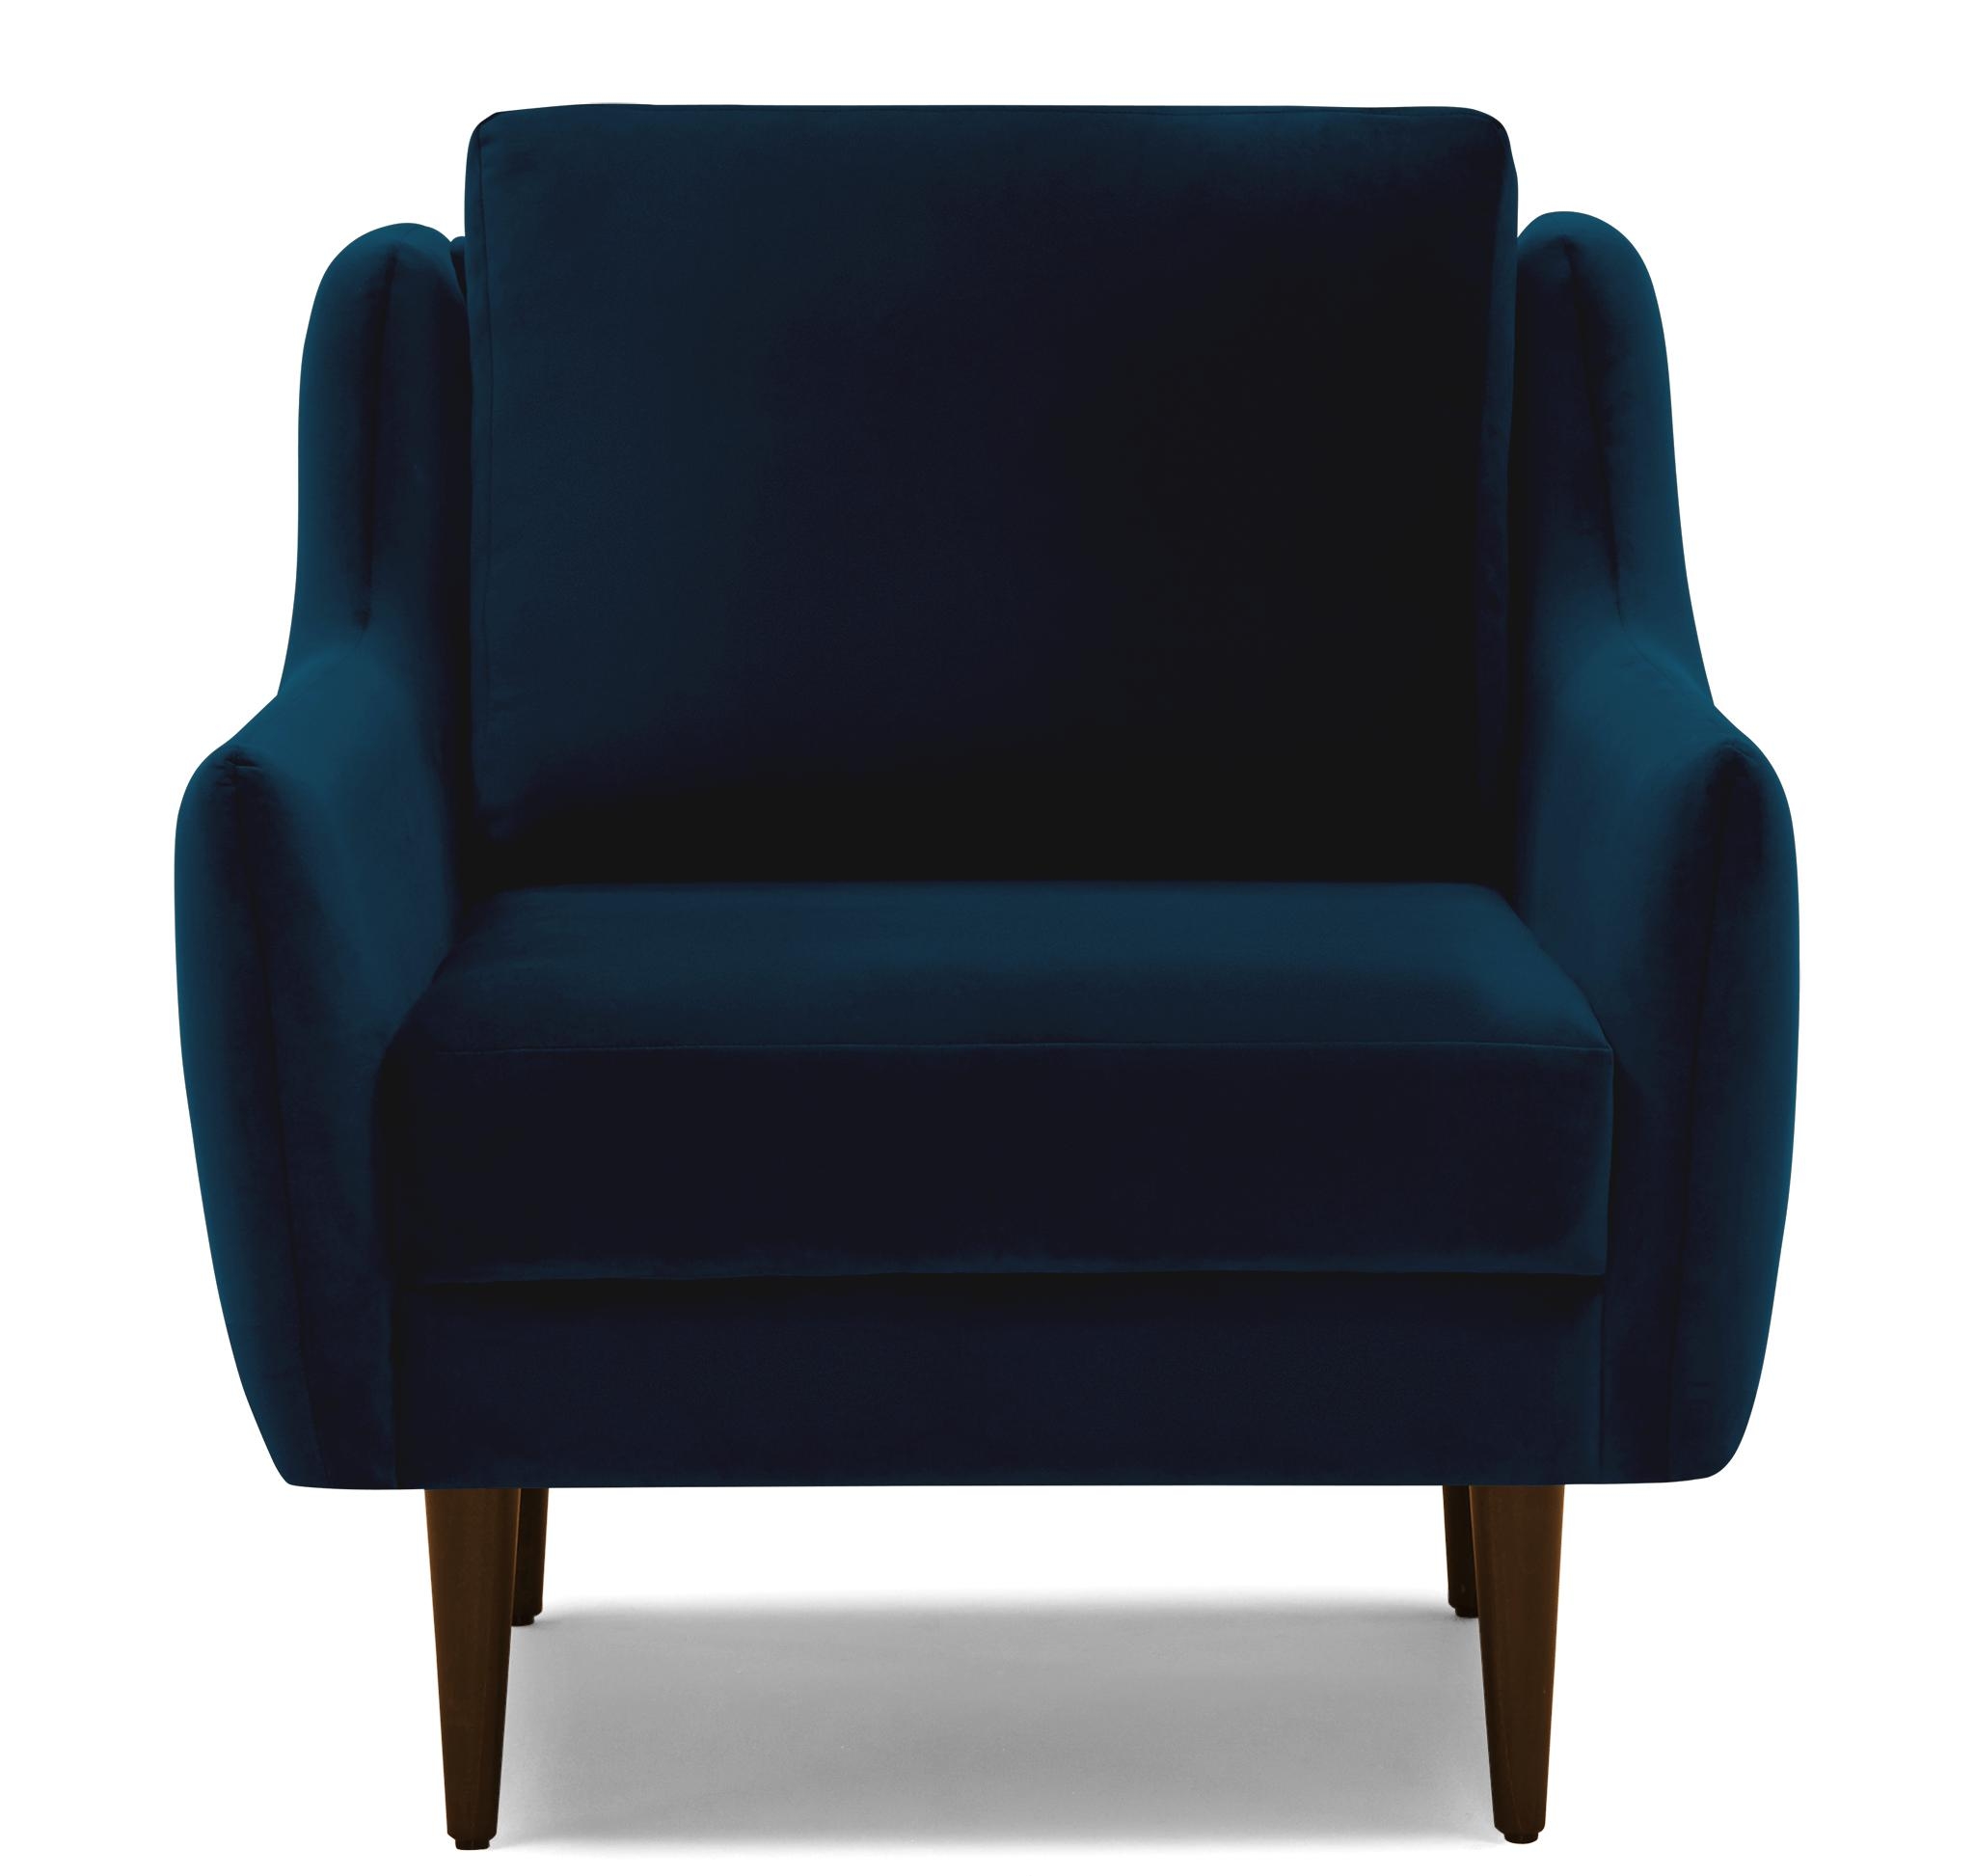 Blue Bell Mid Century Modern Chair - Key Largo Zenith Teal - Mocha - Image 0